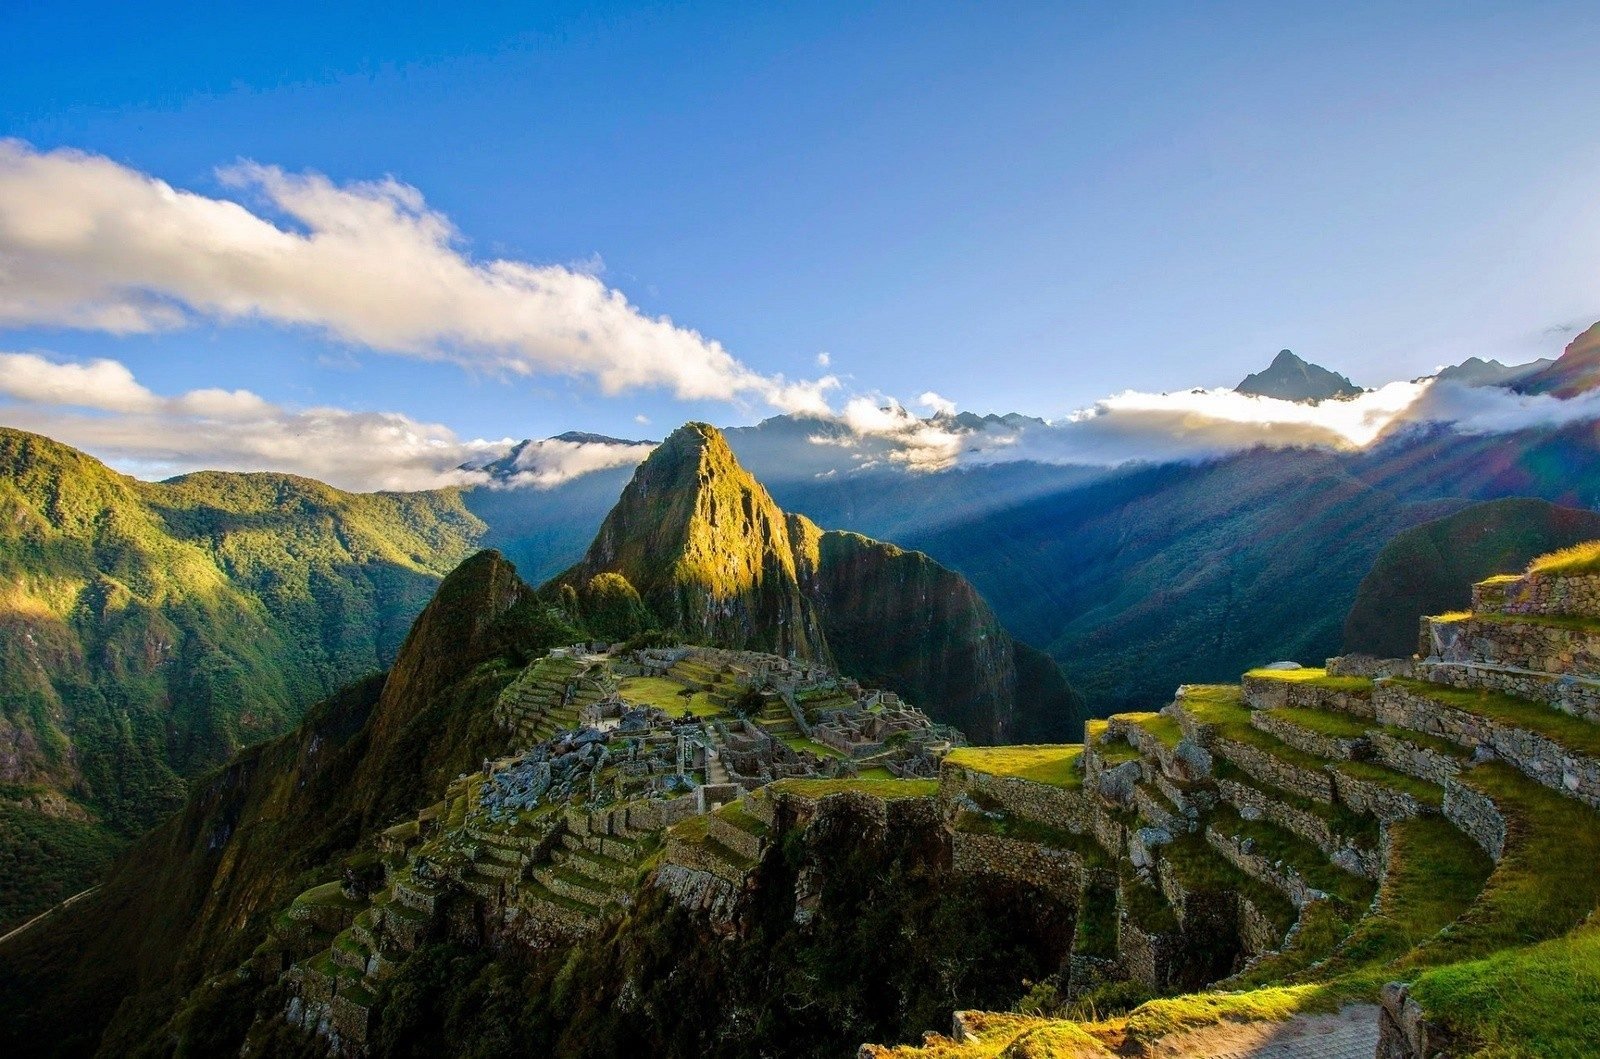 The Inca city of Machu Picchu.